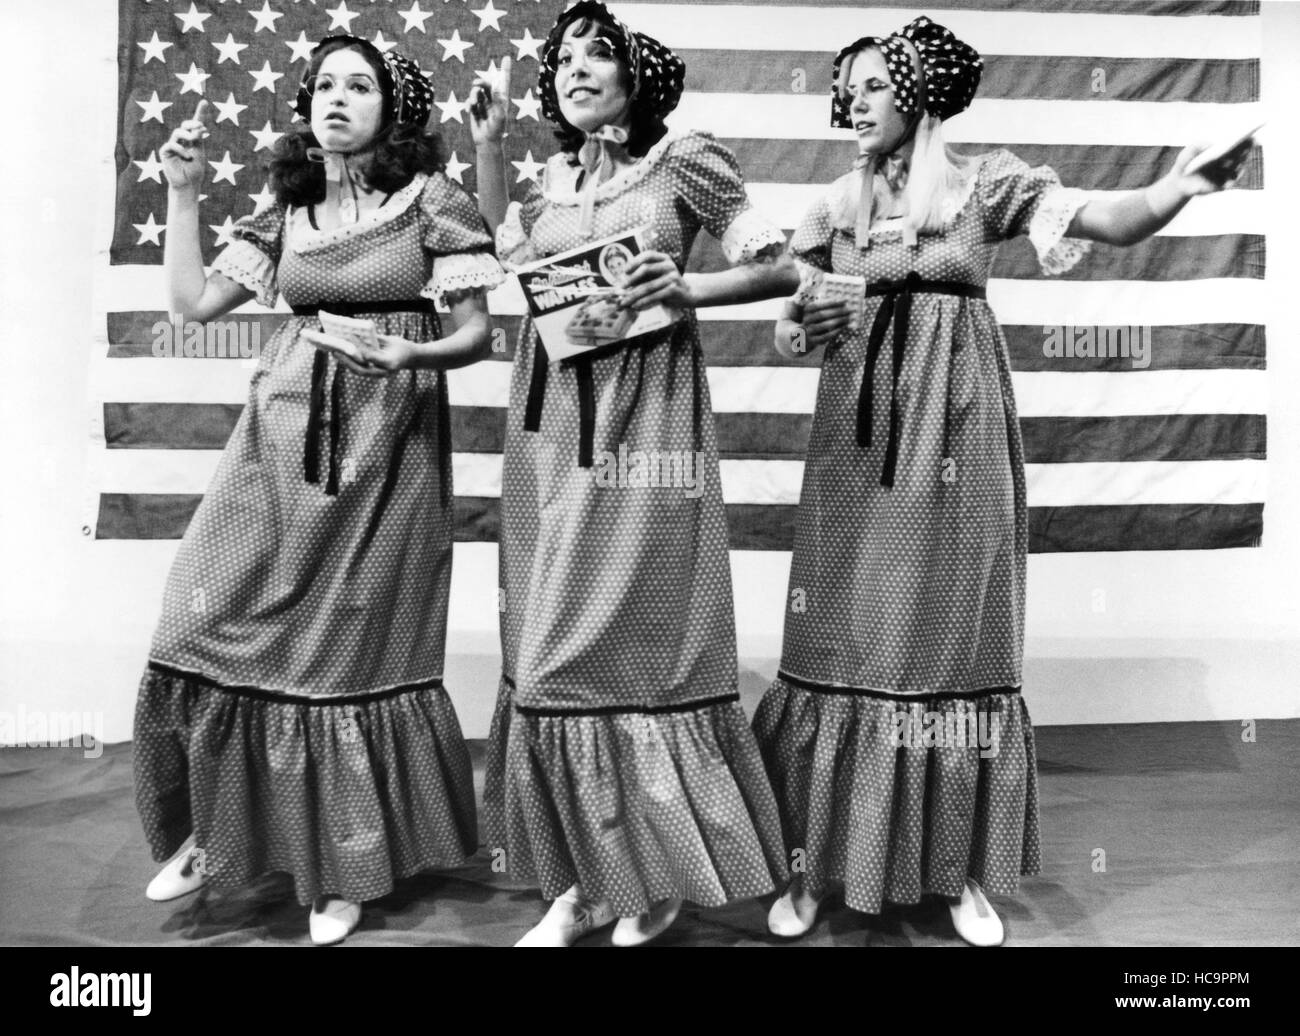 Se ilumina mi vida, Melanie Mayron, Didi Conn, Lisa Reeves, 1977 Foto de stock